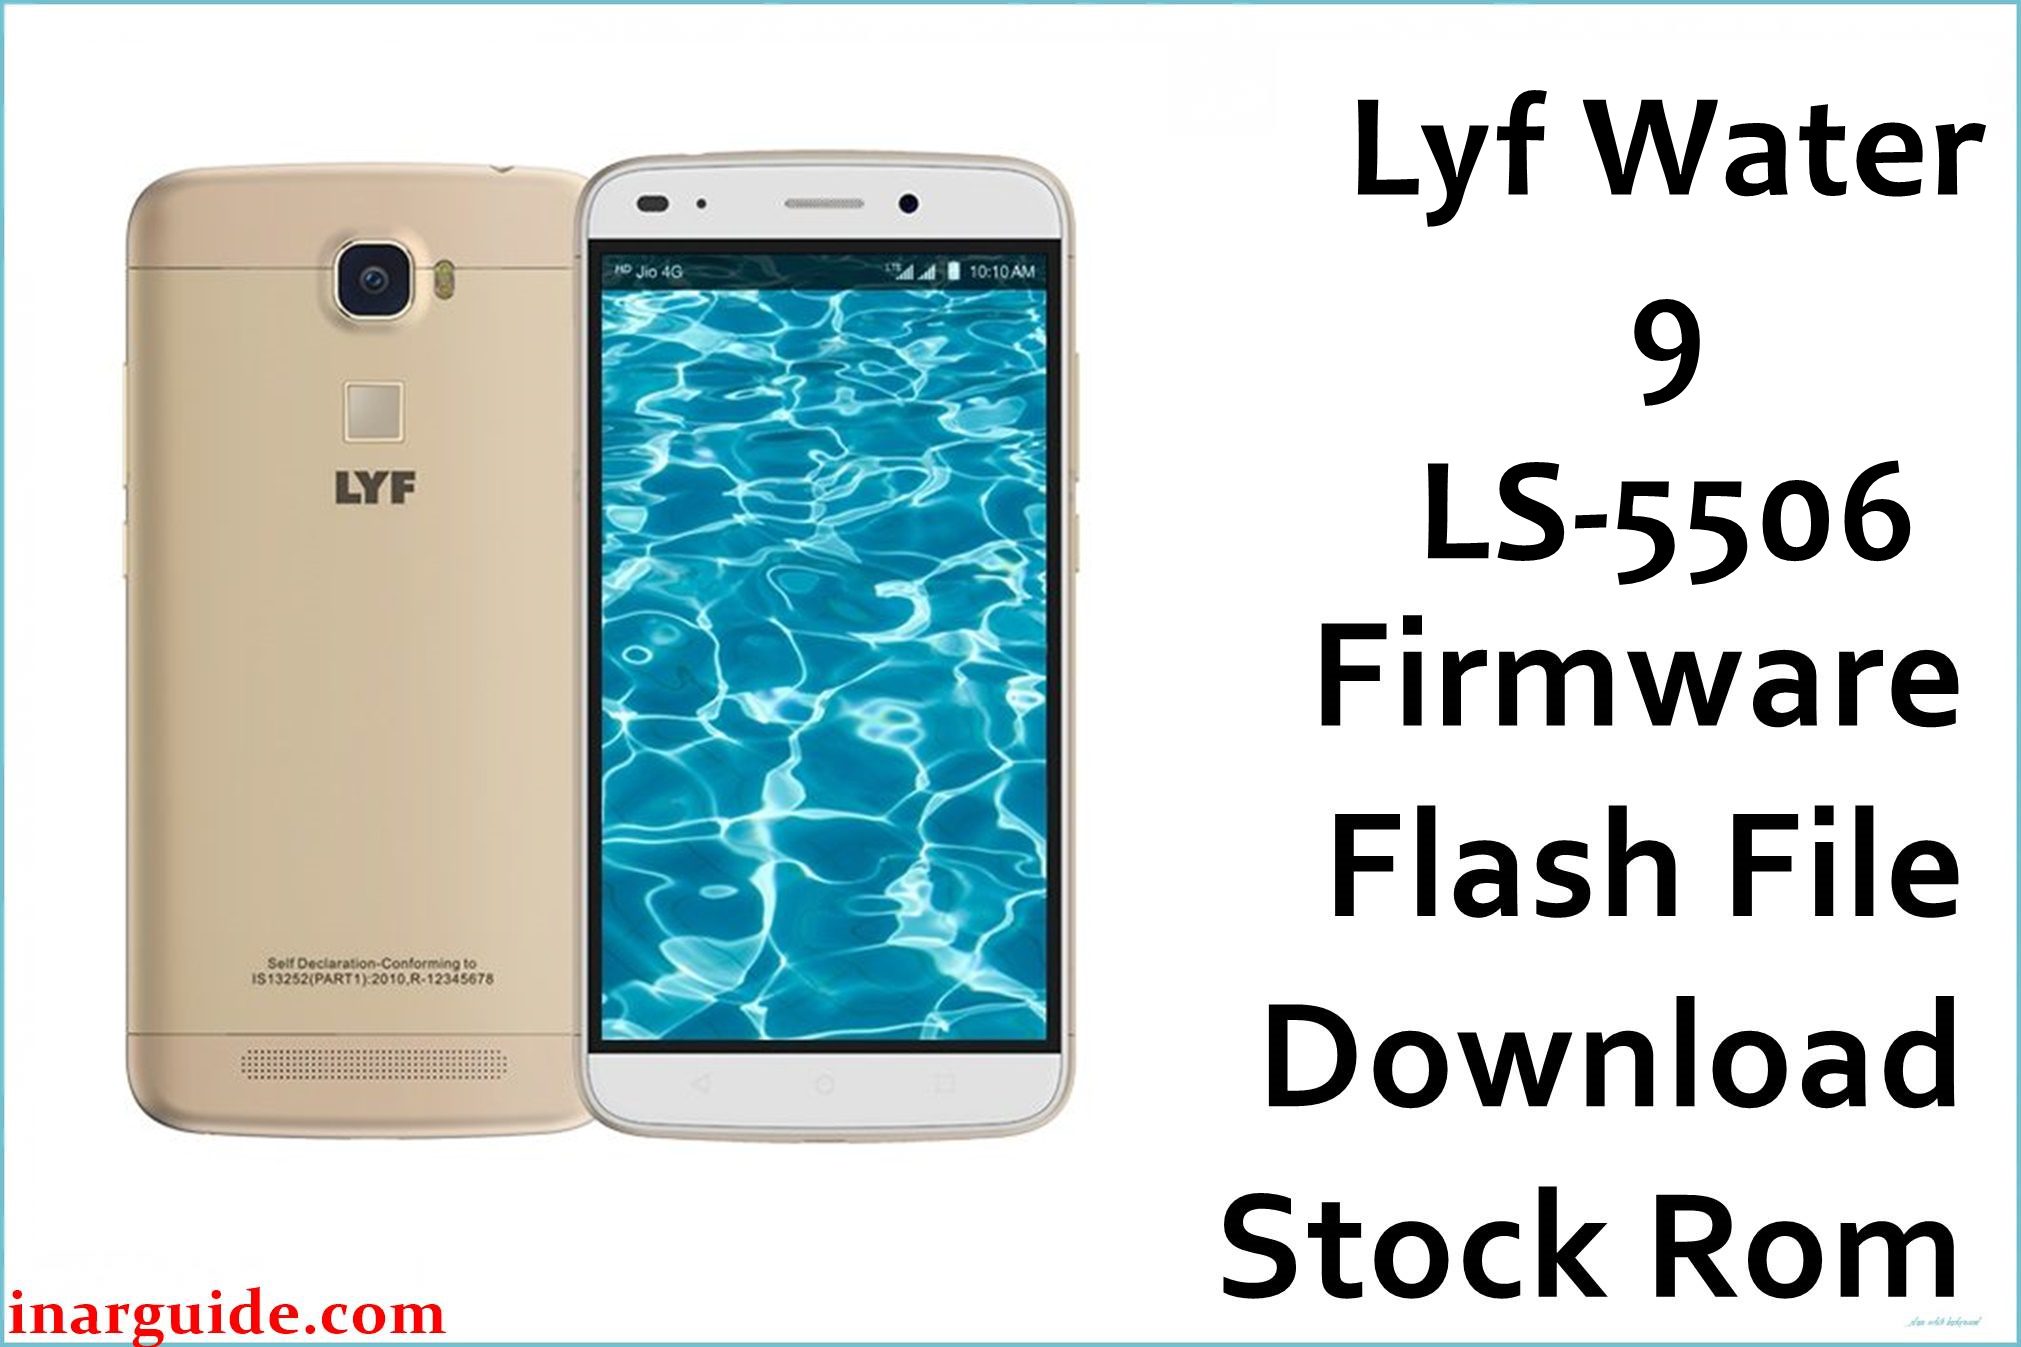 Lyf Water 9 LS 5506